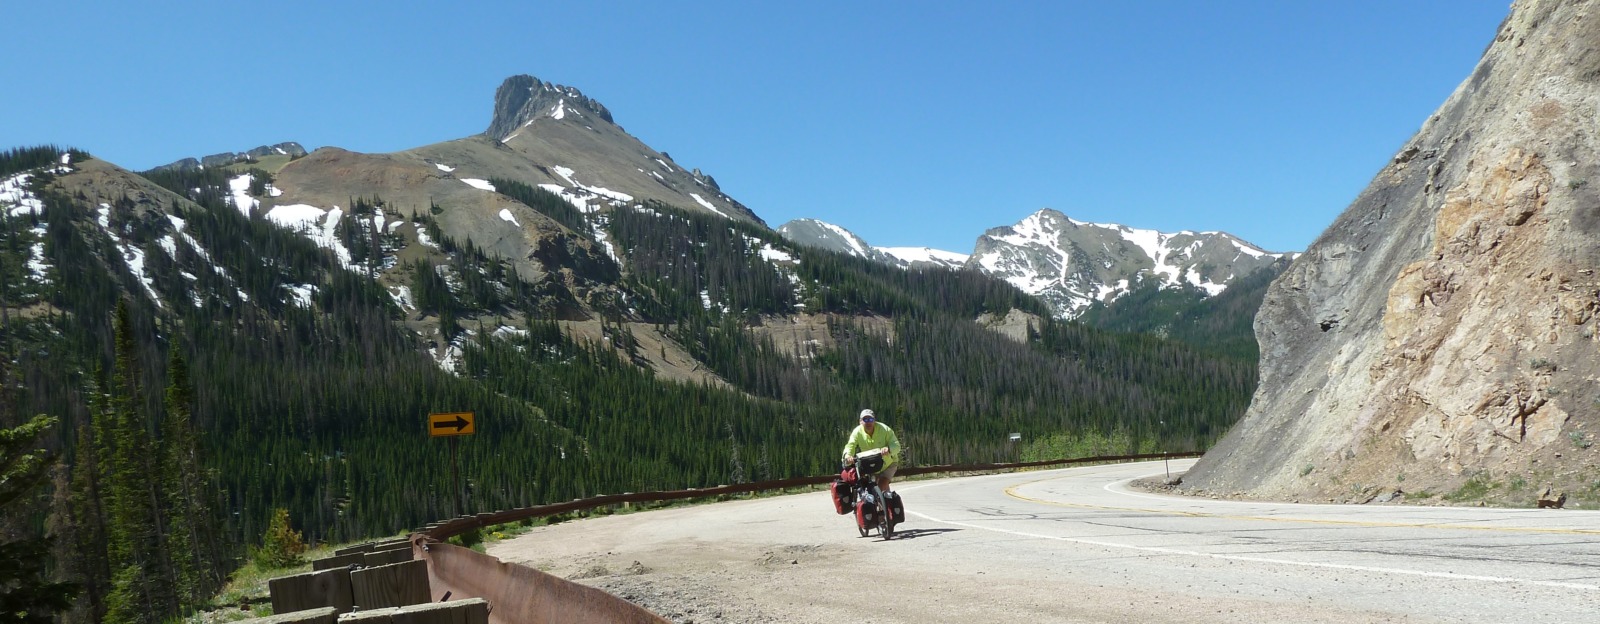 Man cycling on a mountainous road